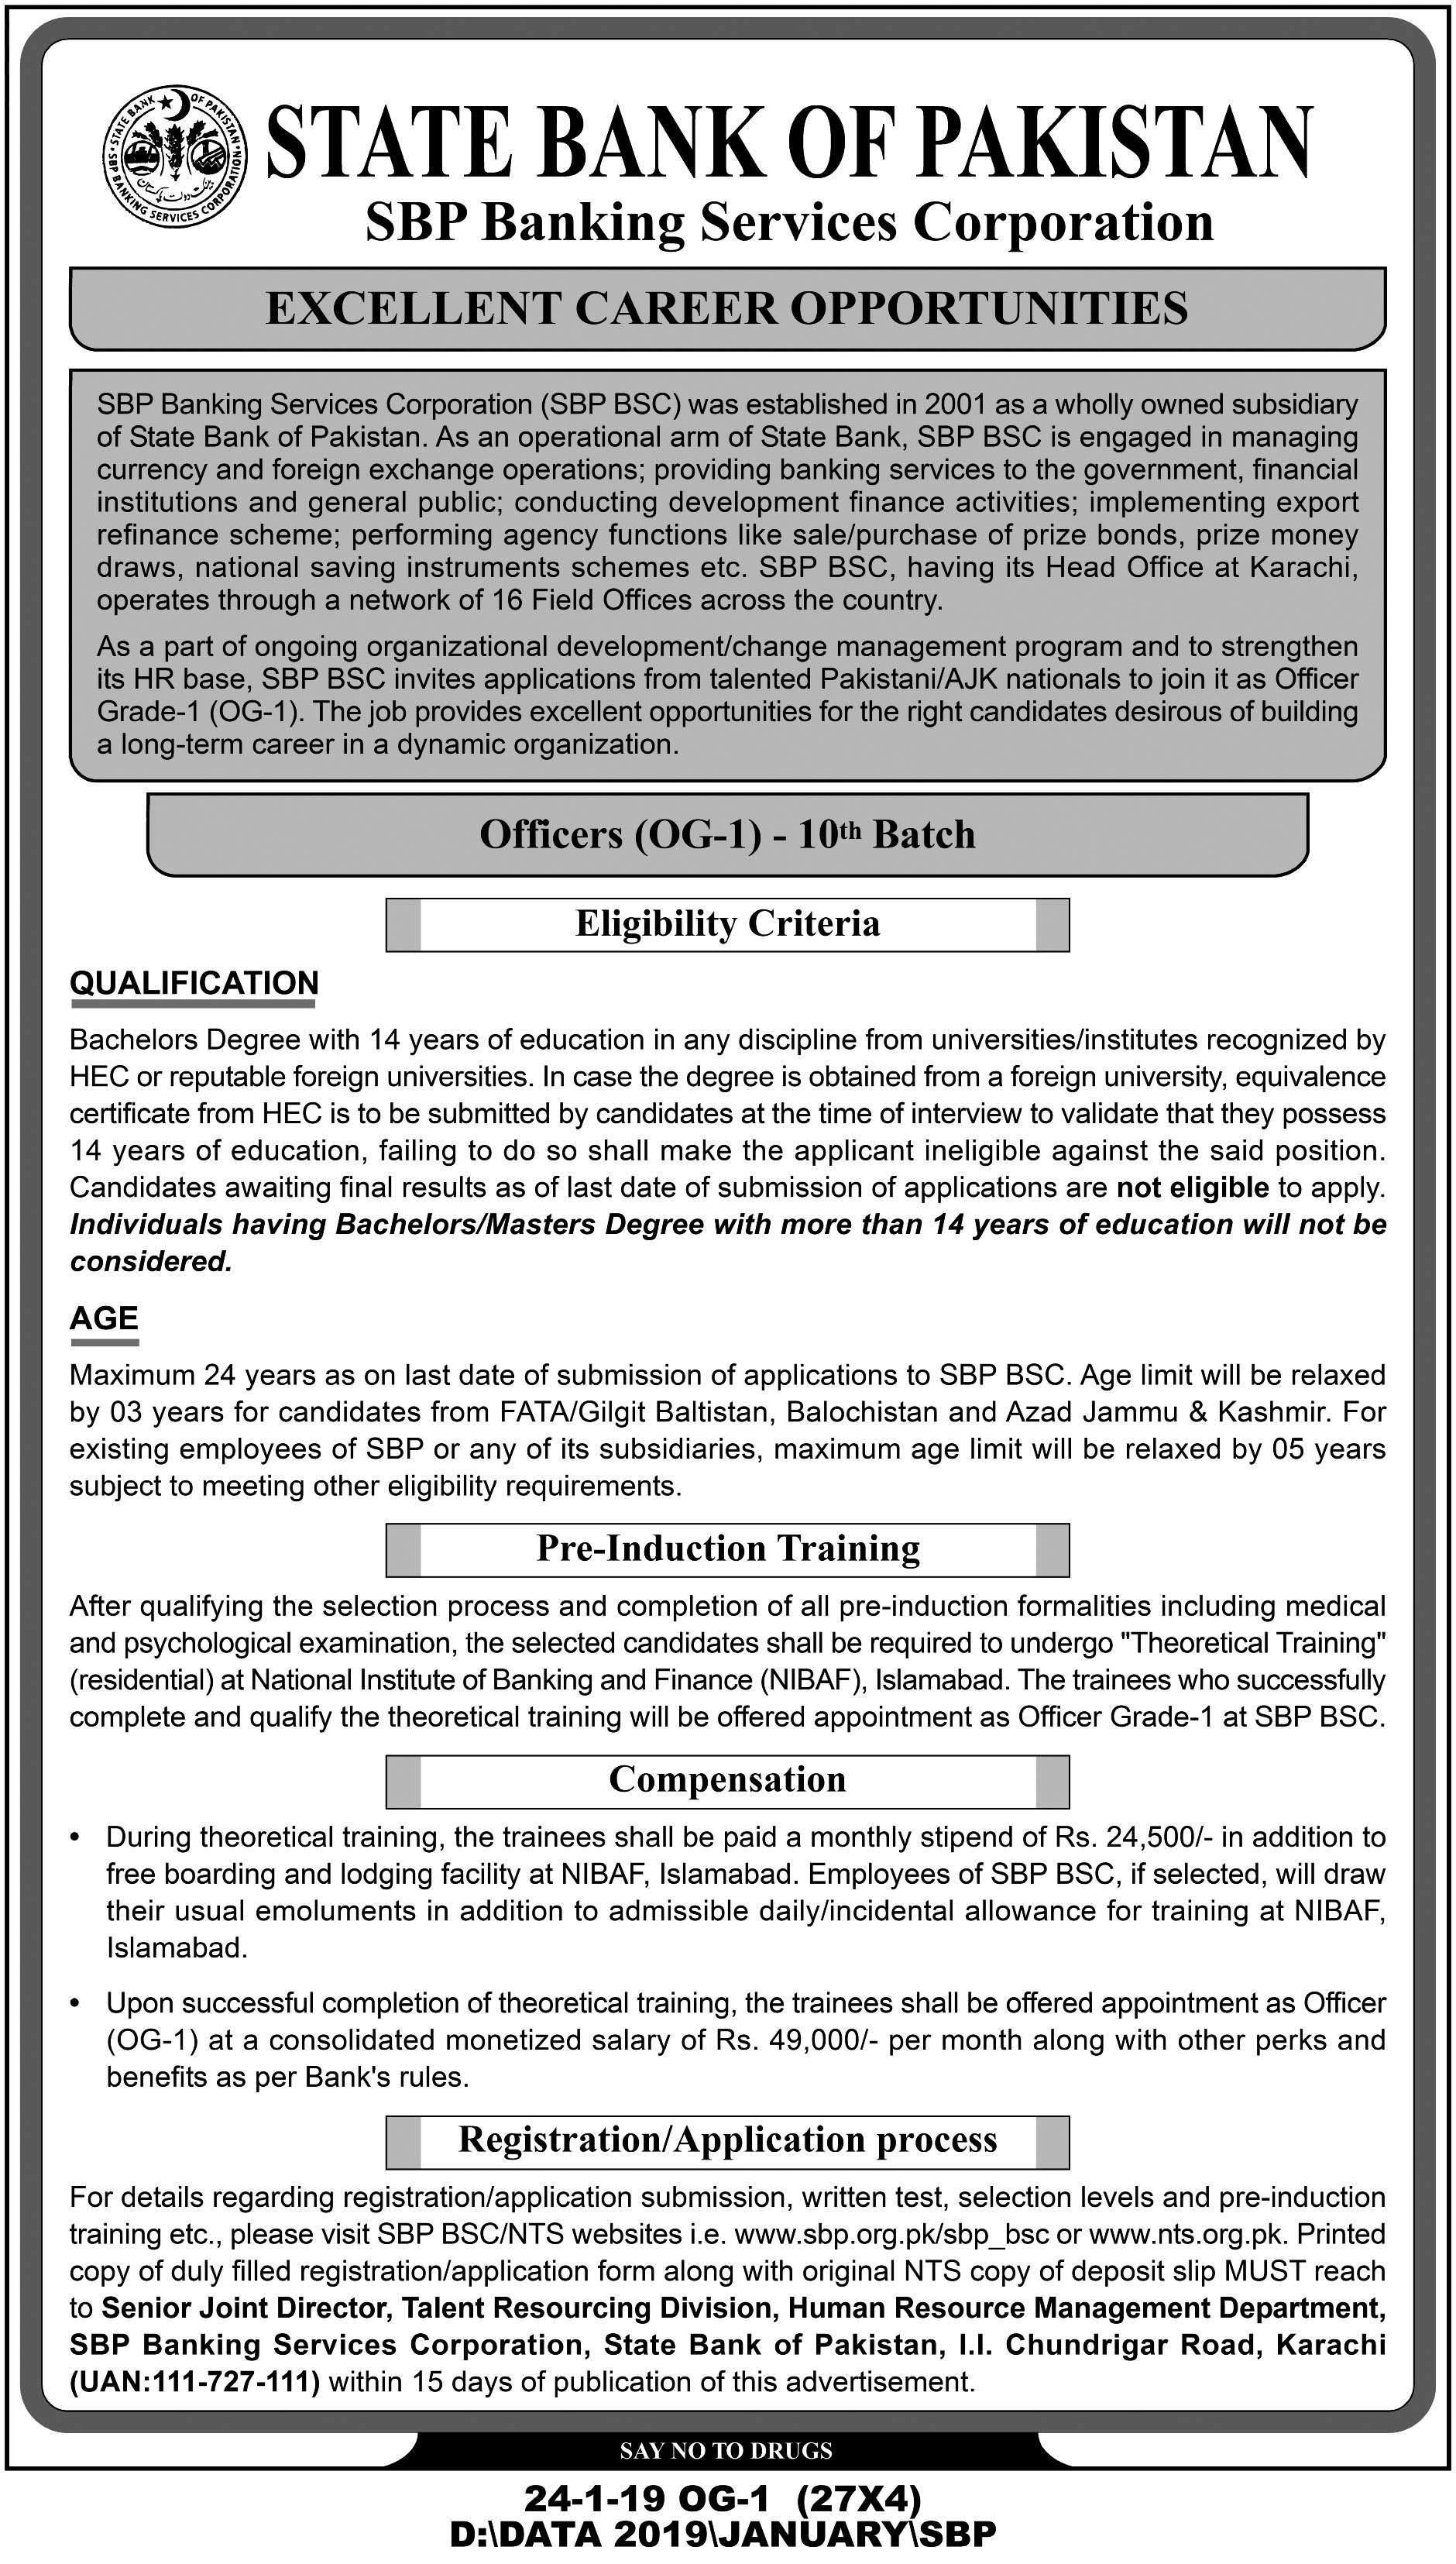 State Bank of Pakistan Jobs 2019